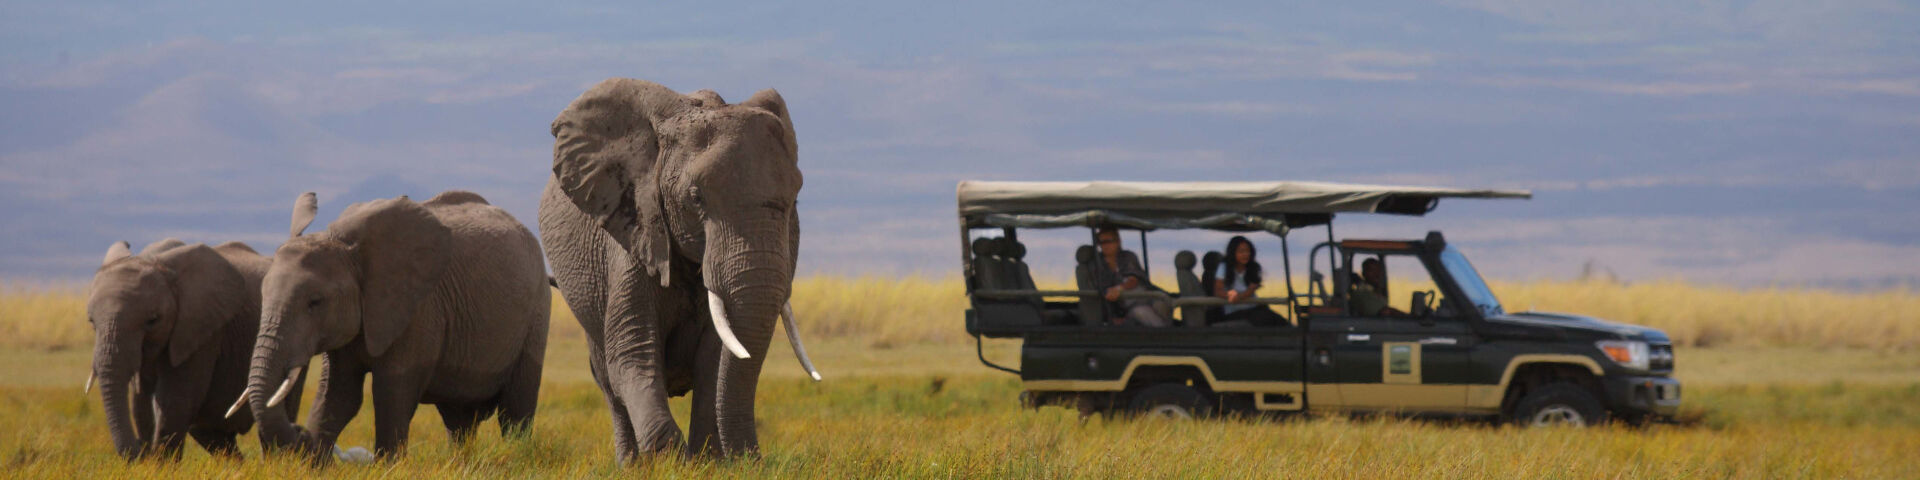 Amboseli Free Ranging Elephants Spotted on Game Drive in Kenya